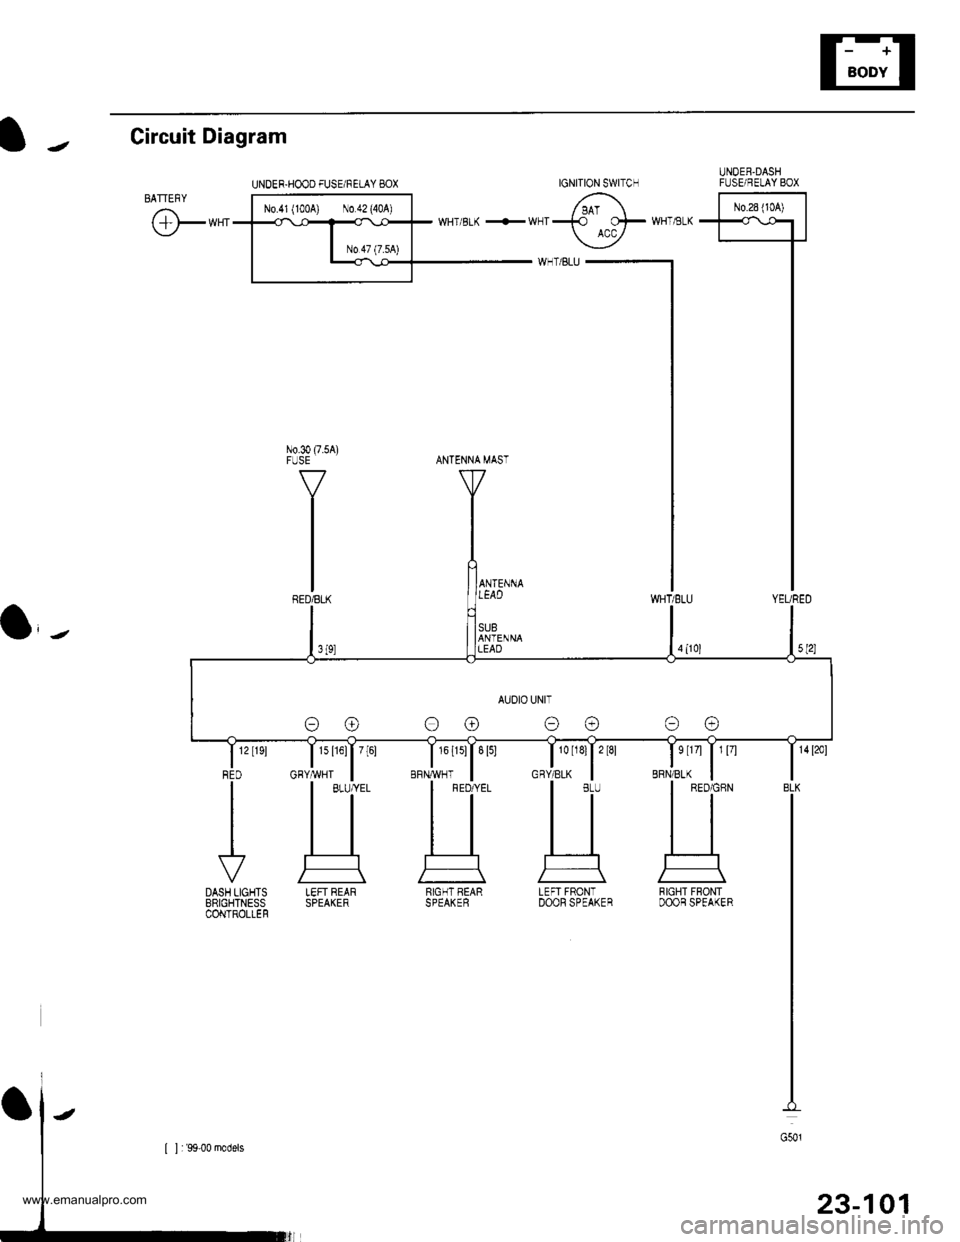 HONDA CR-V 1999 RD1-RD3 / 1.G User Guide 
E
t J Circuit Diagram
UNDER.HOOO FUSE/FELAY BOXUNOEB,DASHFIJSE/RELAY BOX
l-^*"-l
T5 1-T
I
I
I
I
I
IYEURED
No.30 (7.5A)FUSE
WHT,tsLK
BRN/BLK
s tr4 | 1 l7l
a,-,
1s l16l| 7[61
GHY,ryVHT
IGNITION SWITCH